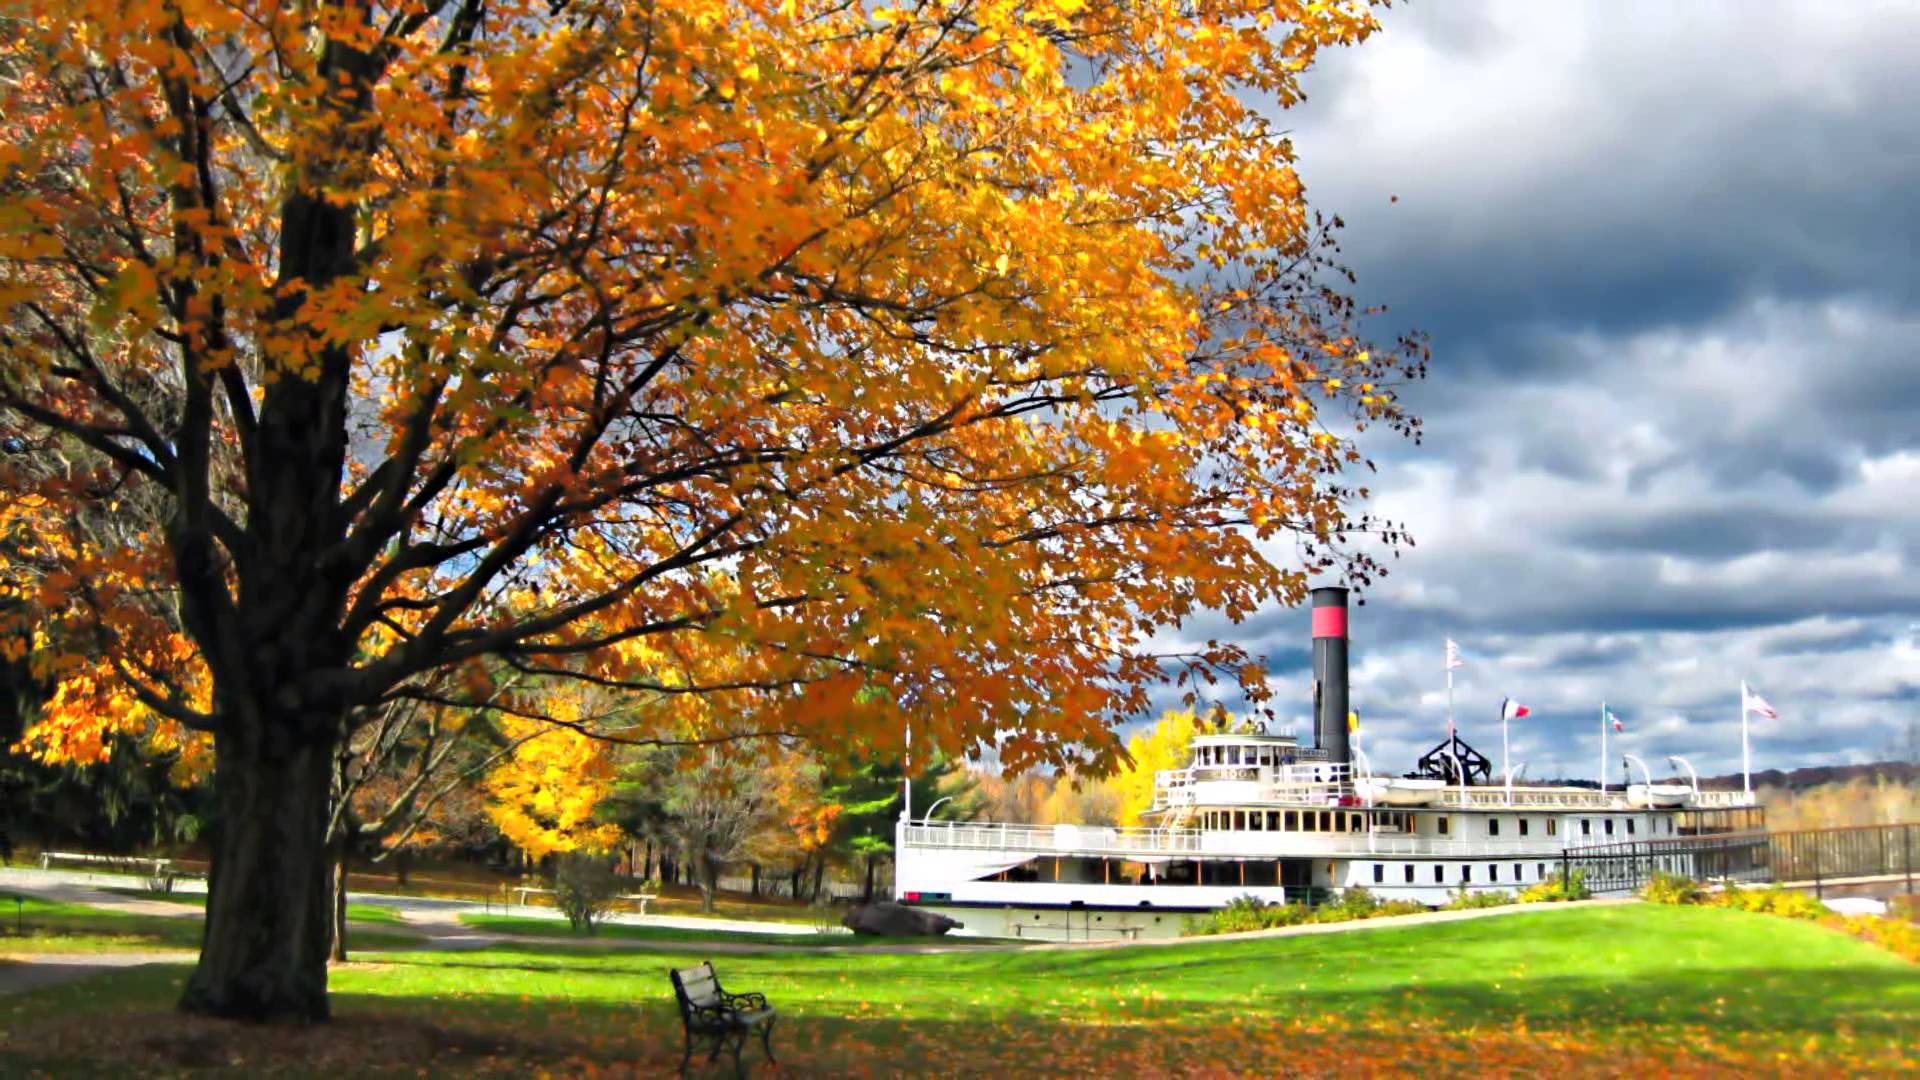 Beautiful Autumn Scenes in Vermont - YouTube